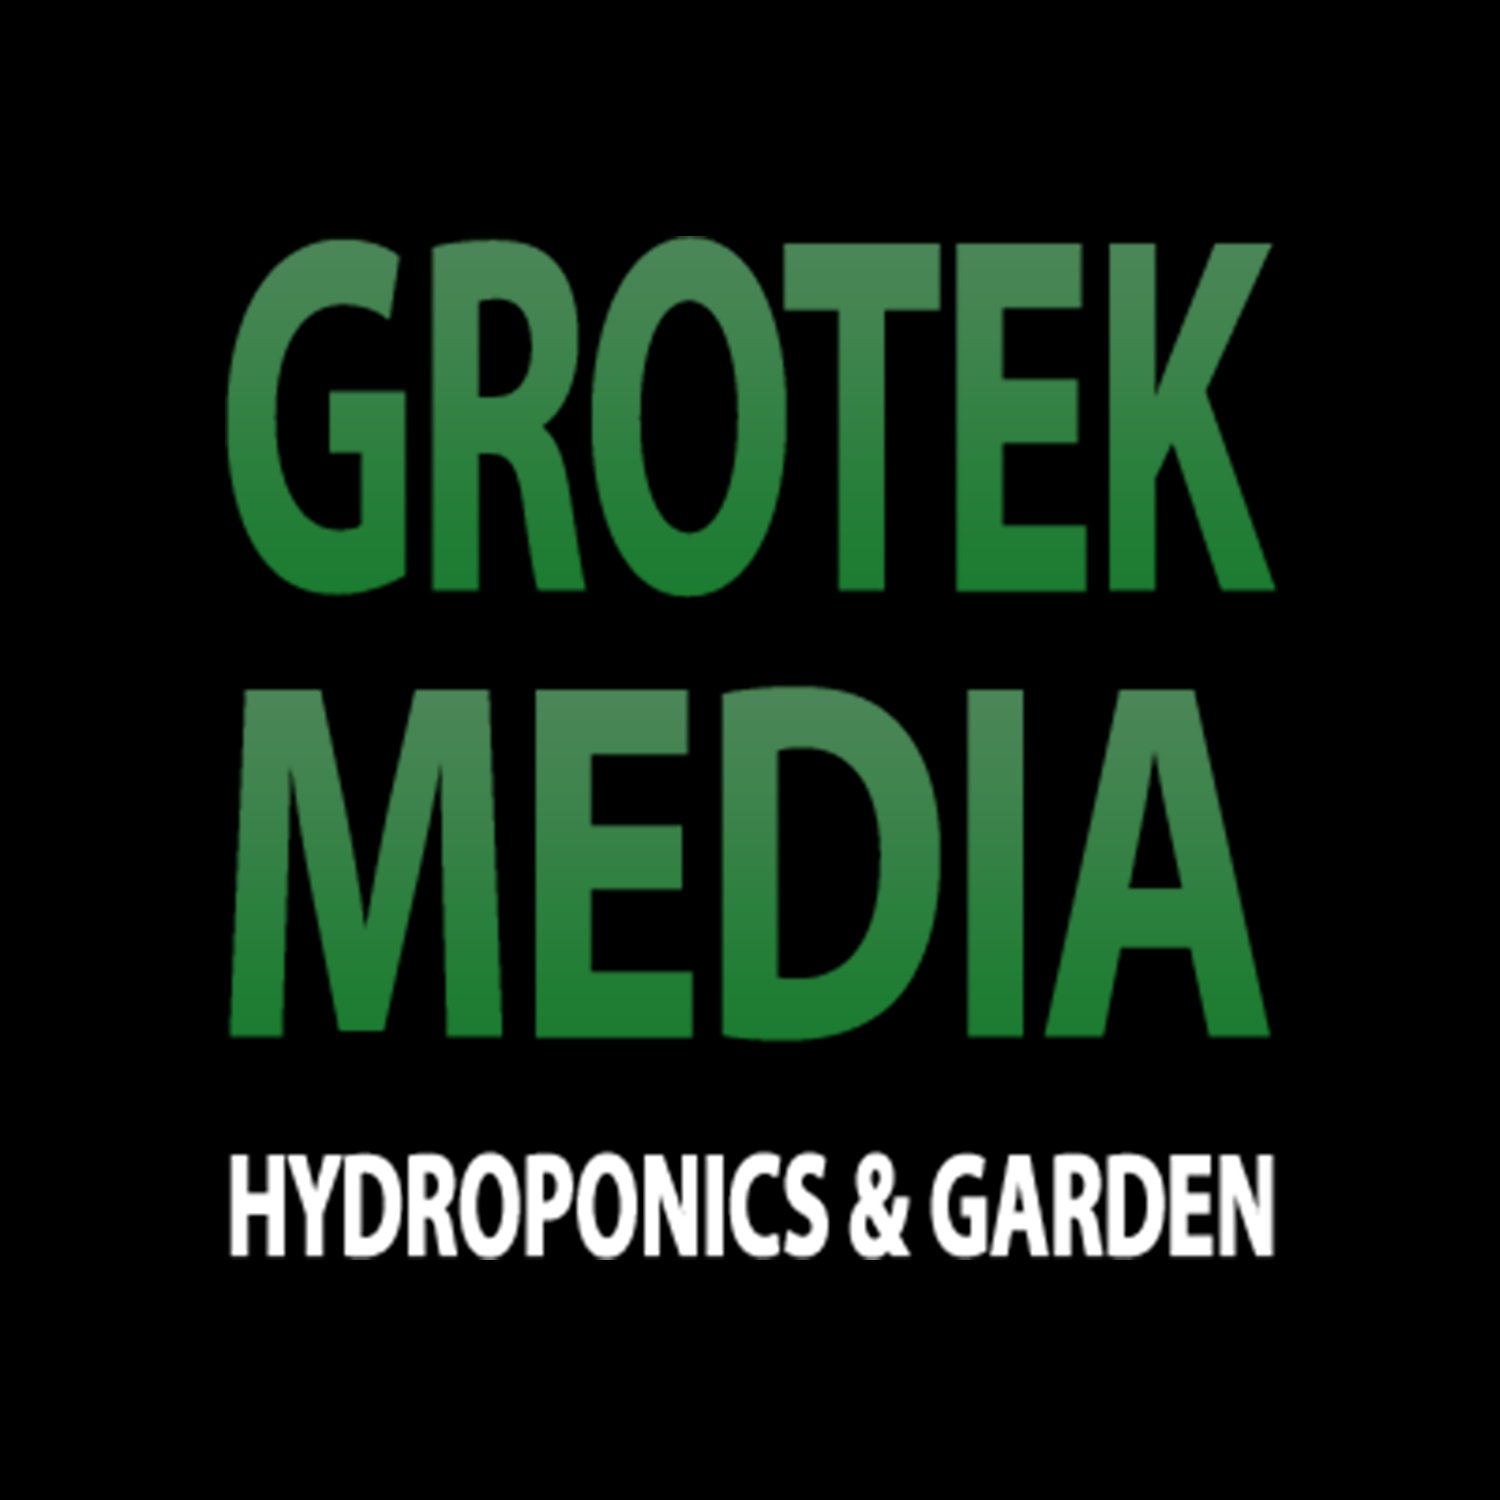 Hydroponics & Gardening https://t.co/H0RZnZhhuM